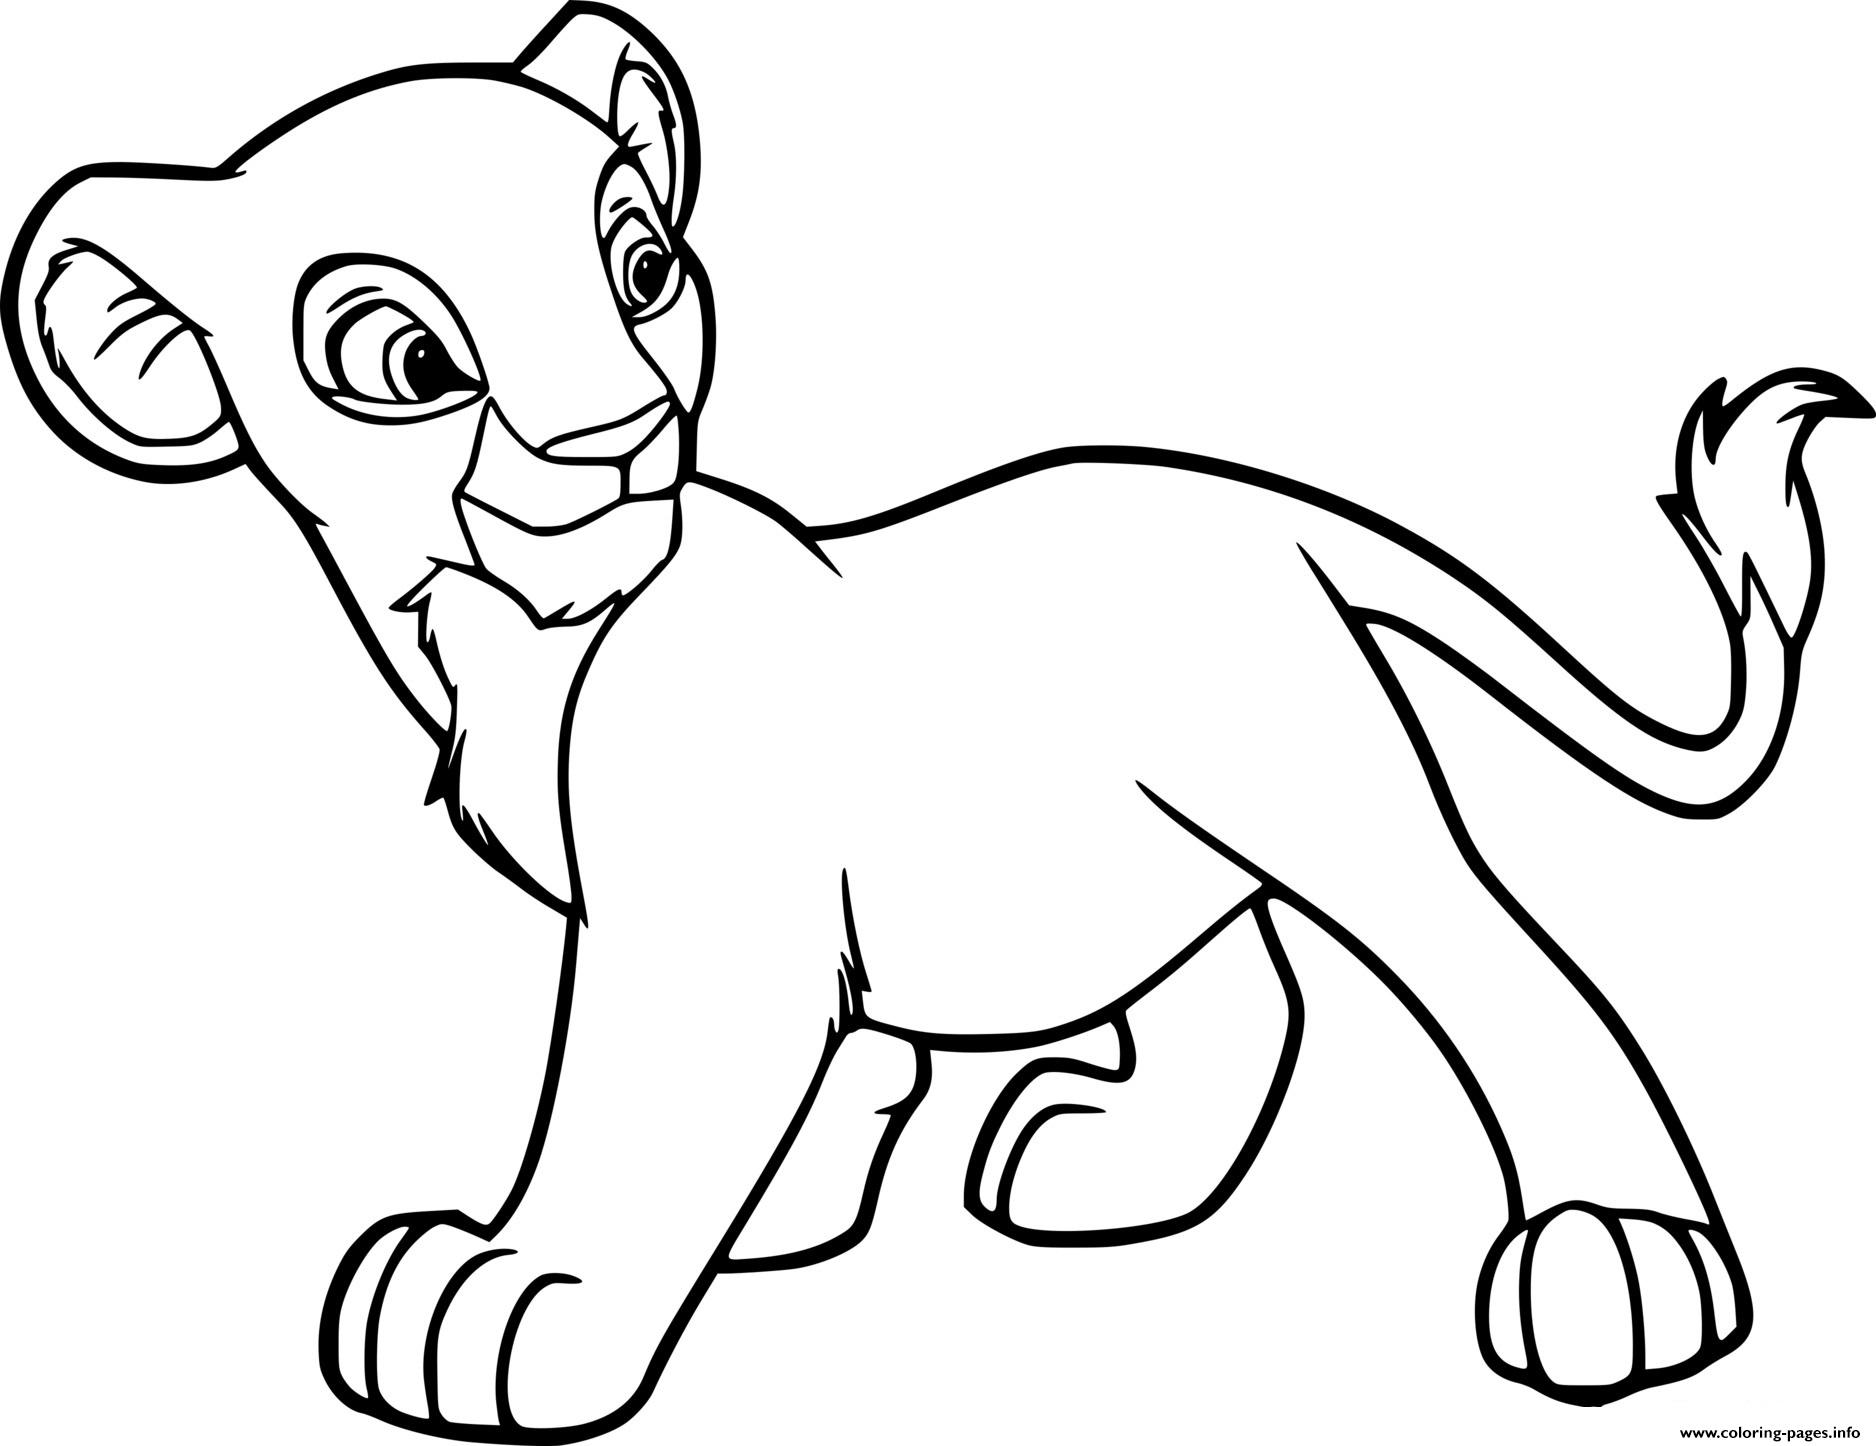 Young Nala Lion coloring